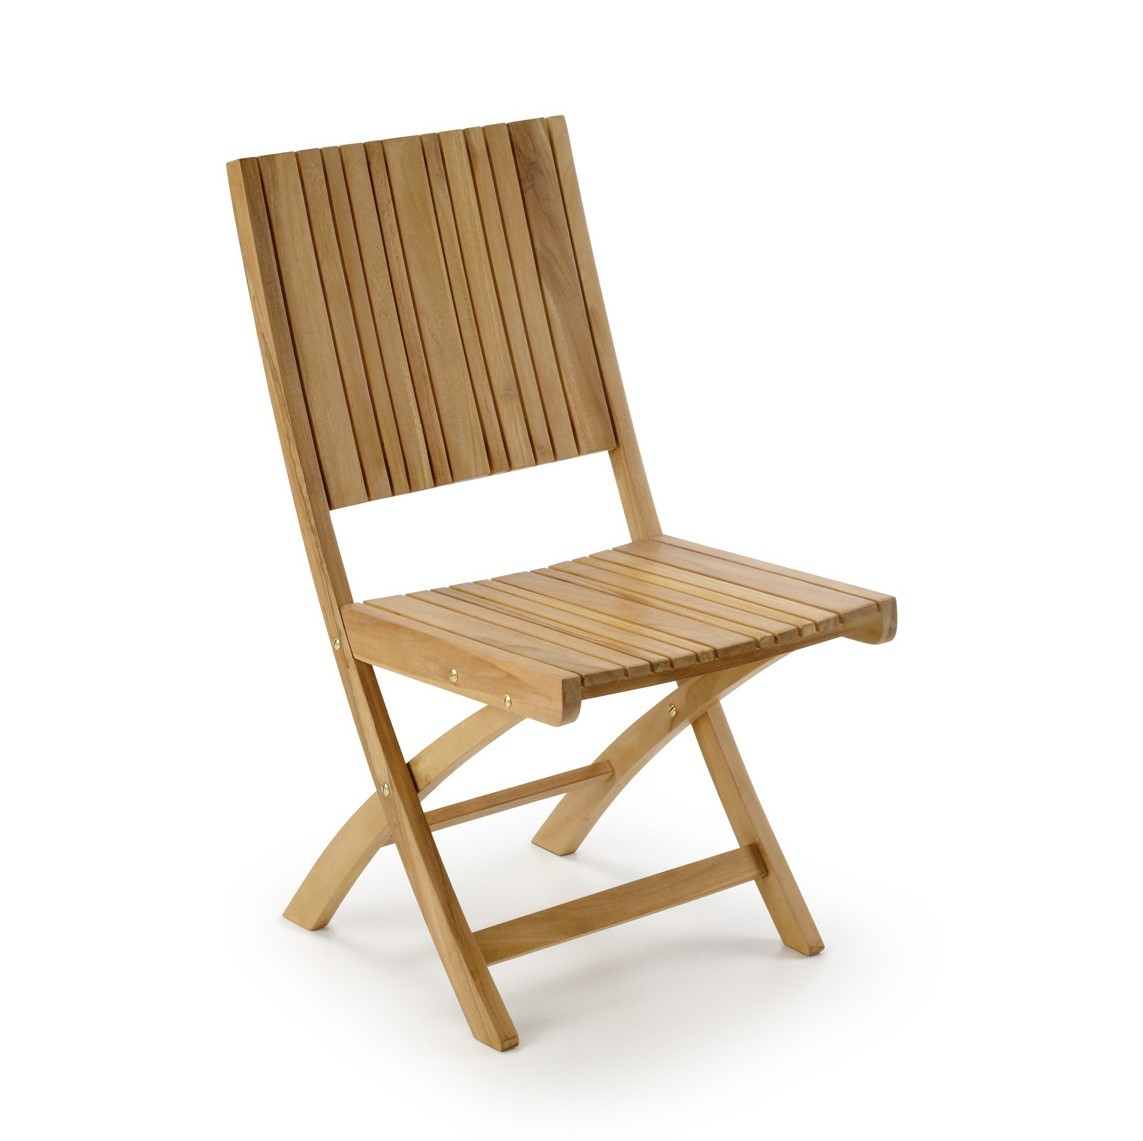 Estila Dizajnová stolička z teakového dreva Jardin s operadlami